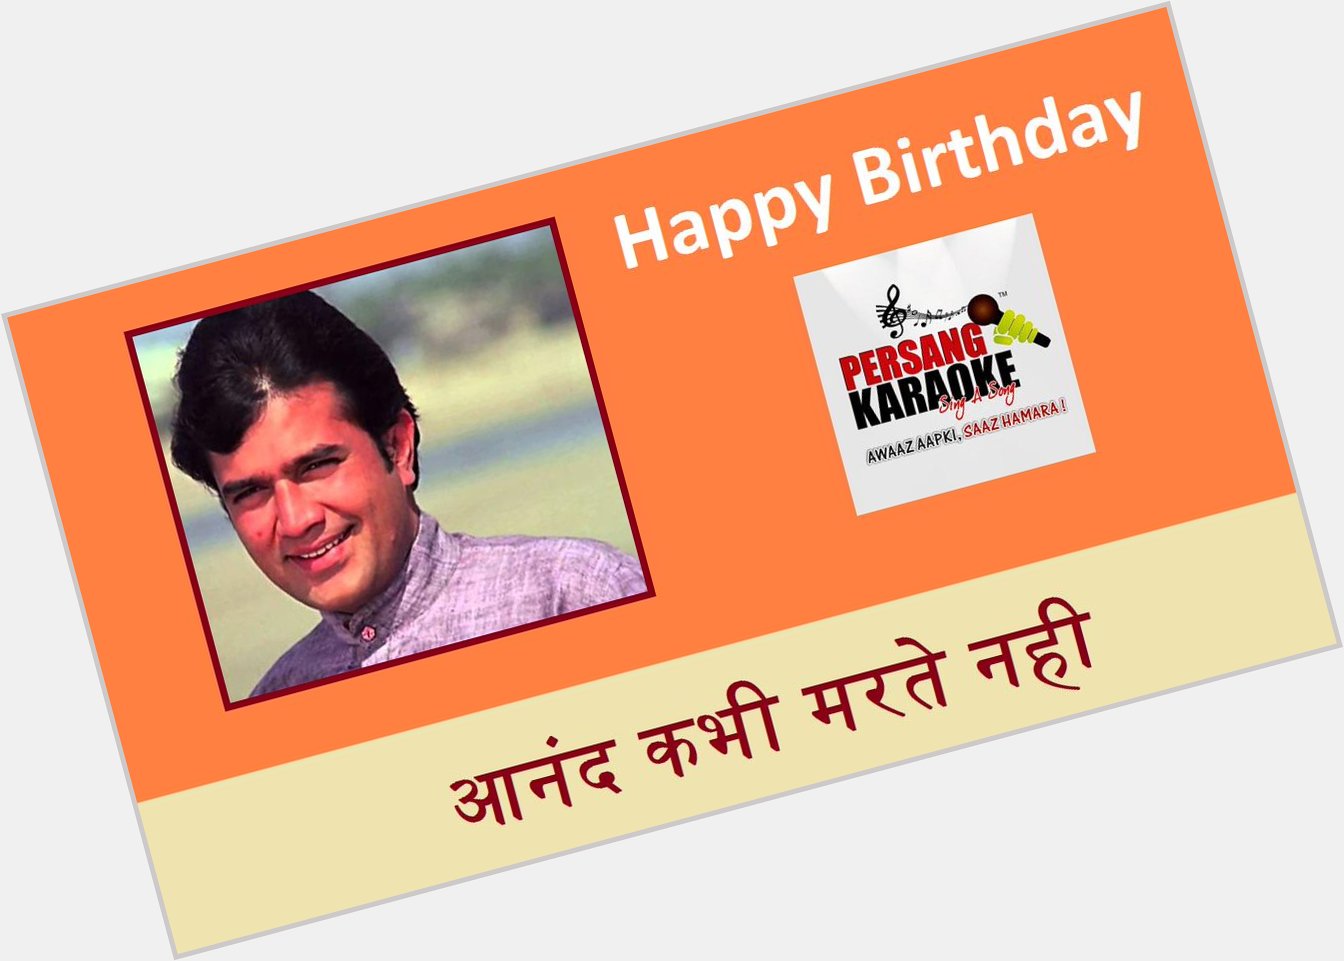 Persang Karaoke wishing Happy Birthday to Late Shri Rajesh Khanna...   